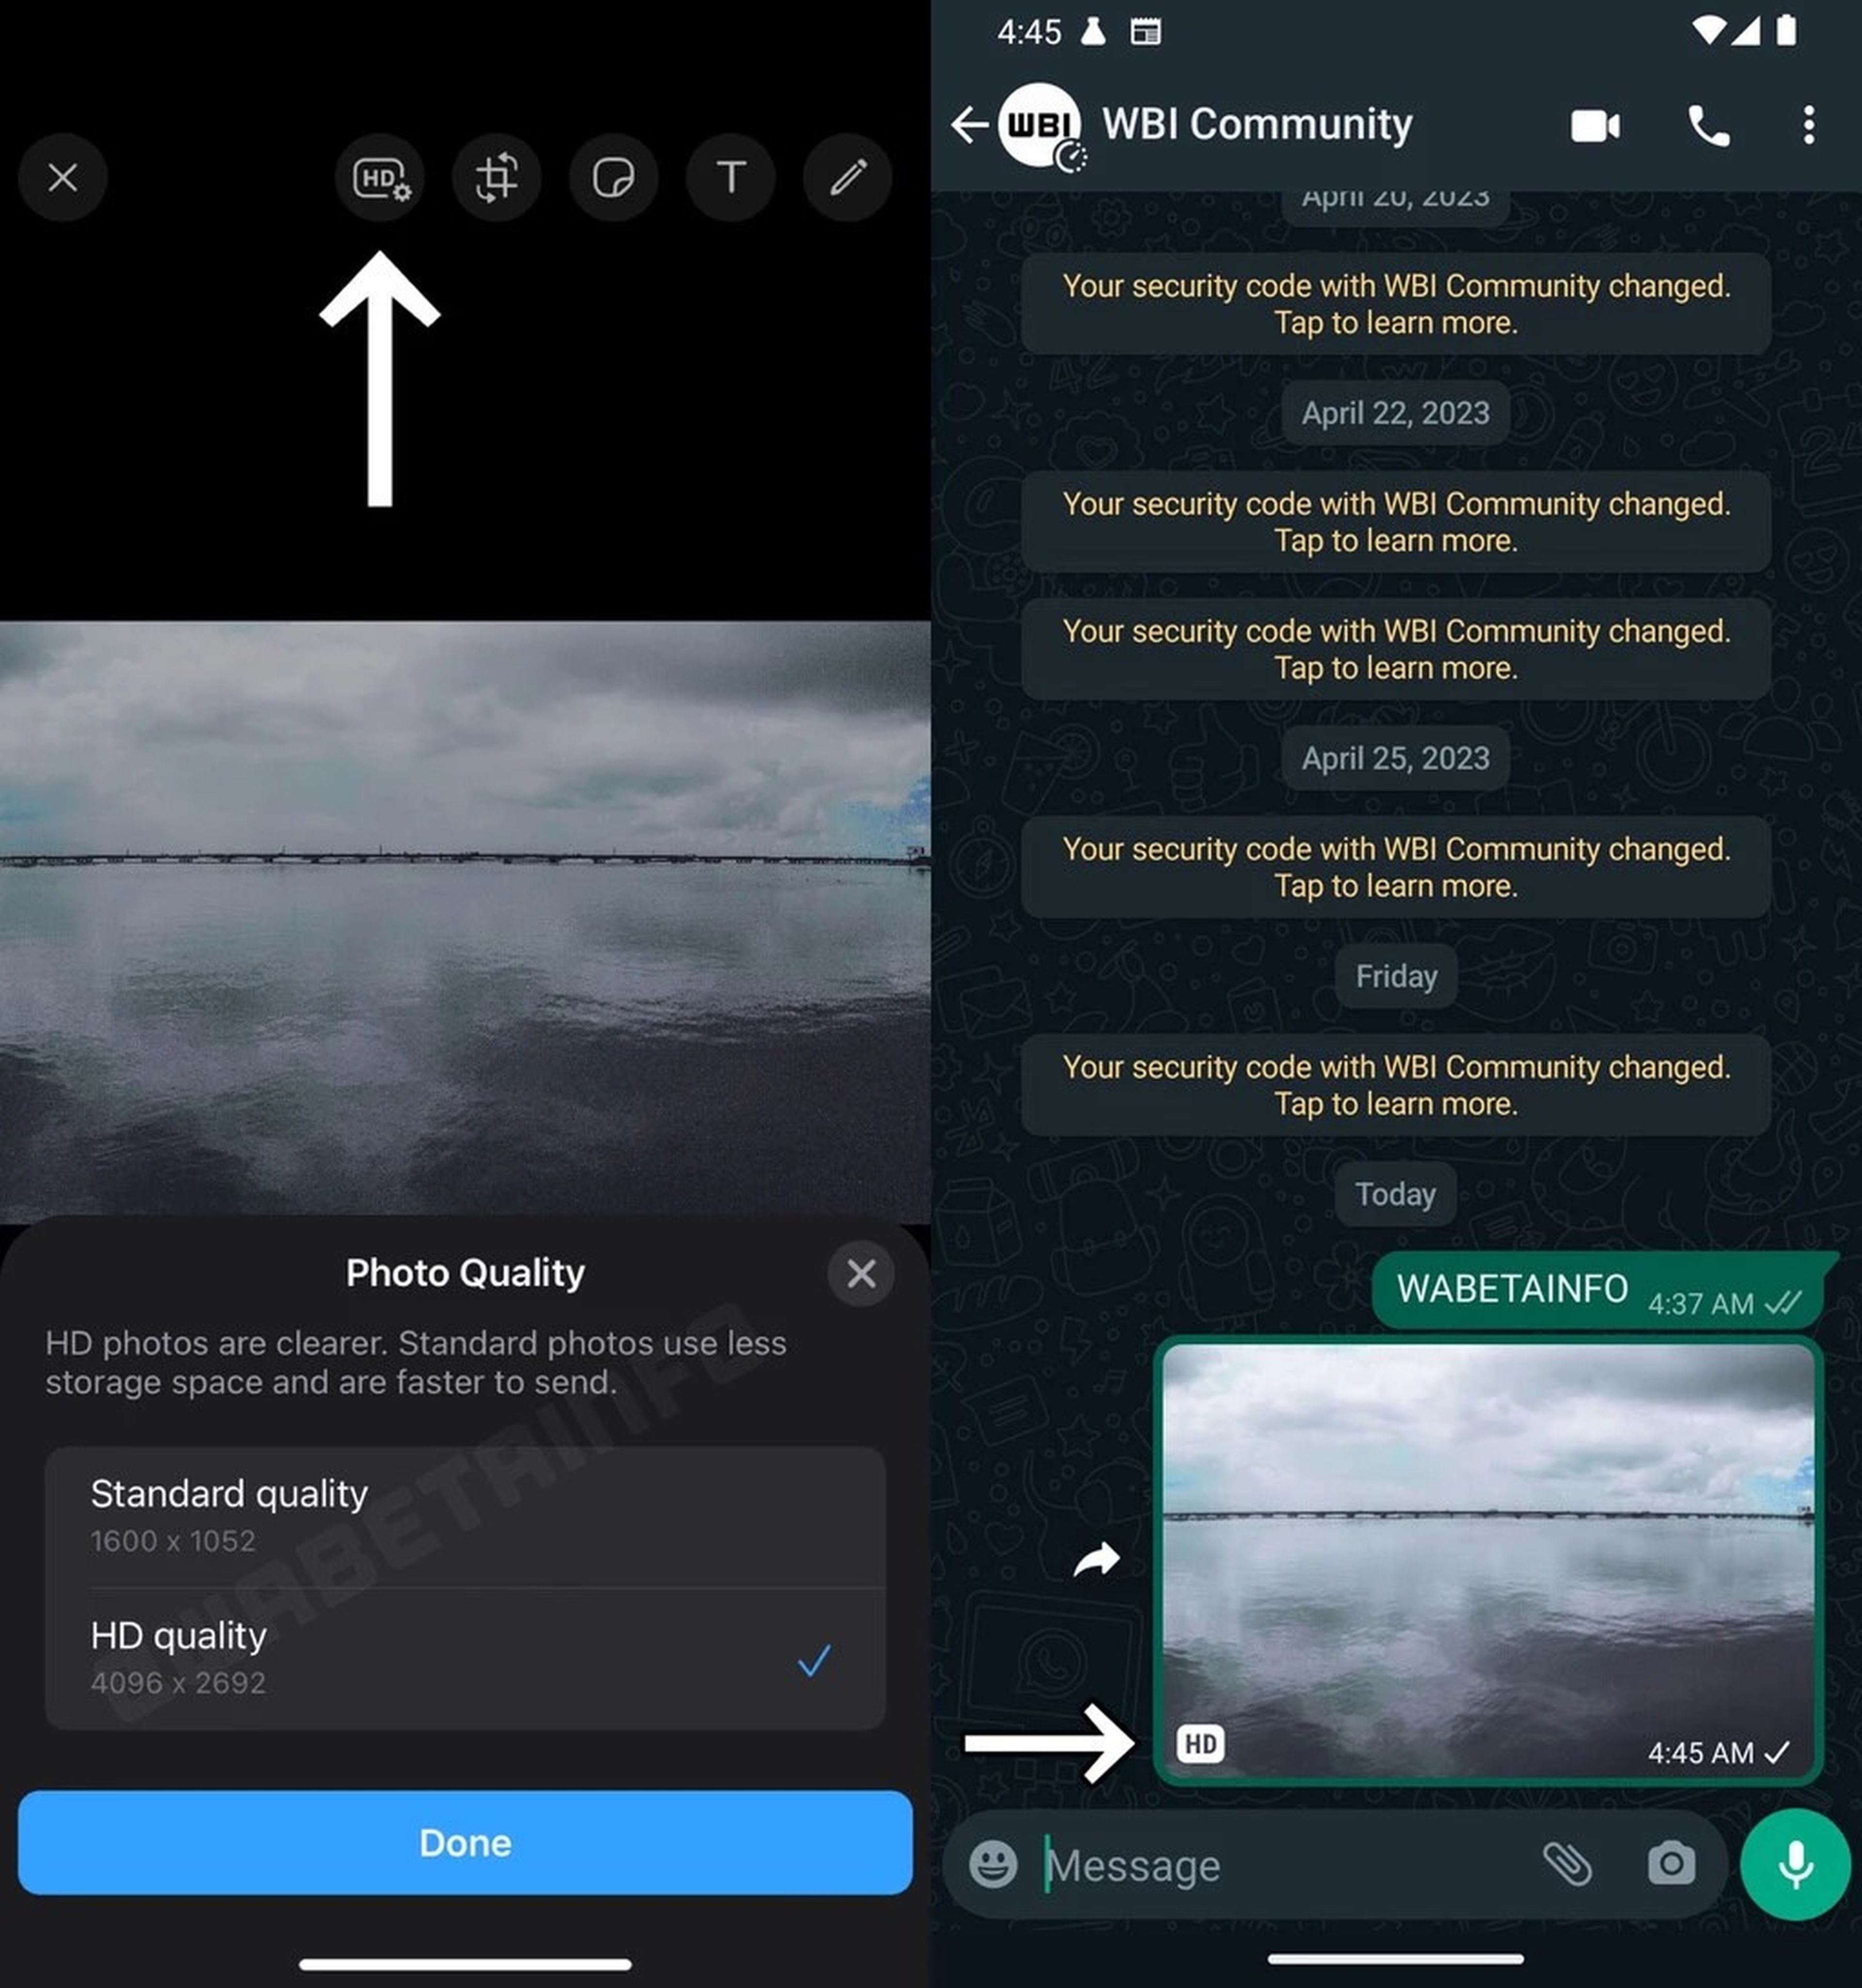 Enviar fotos en alta resolución en WhatsApp ya es posible para Android e iOS